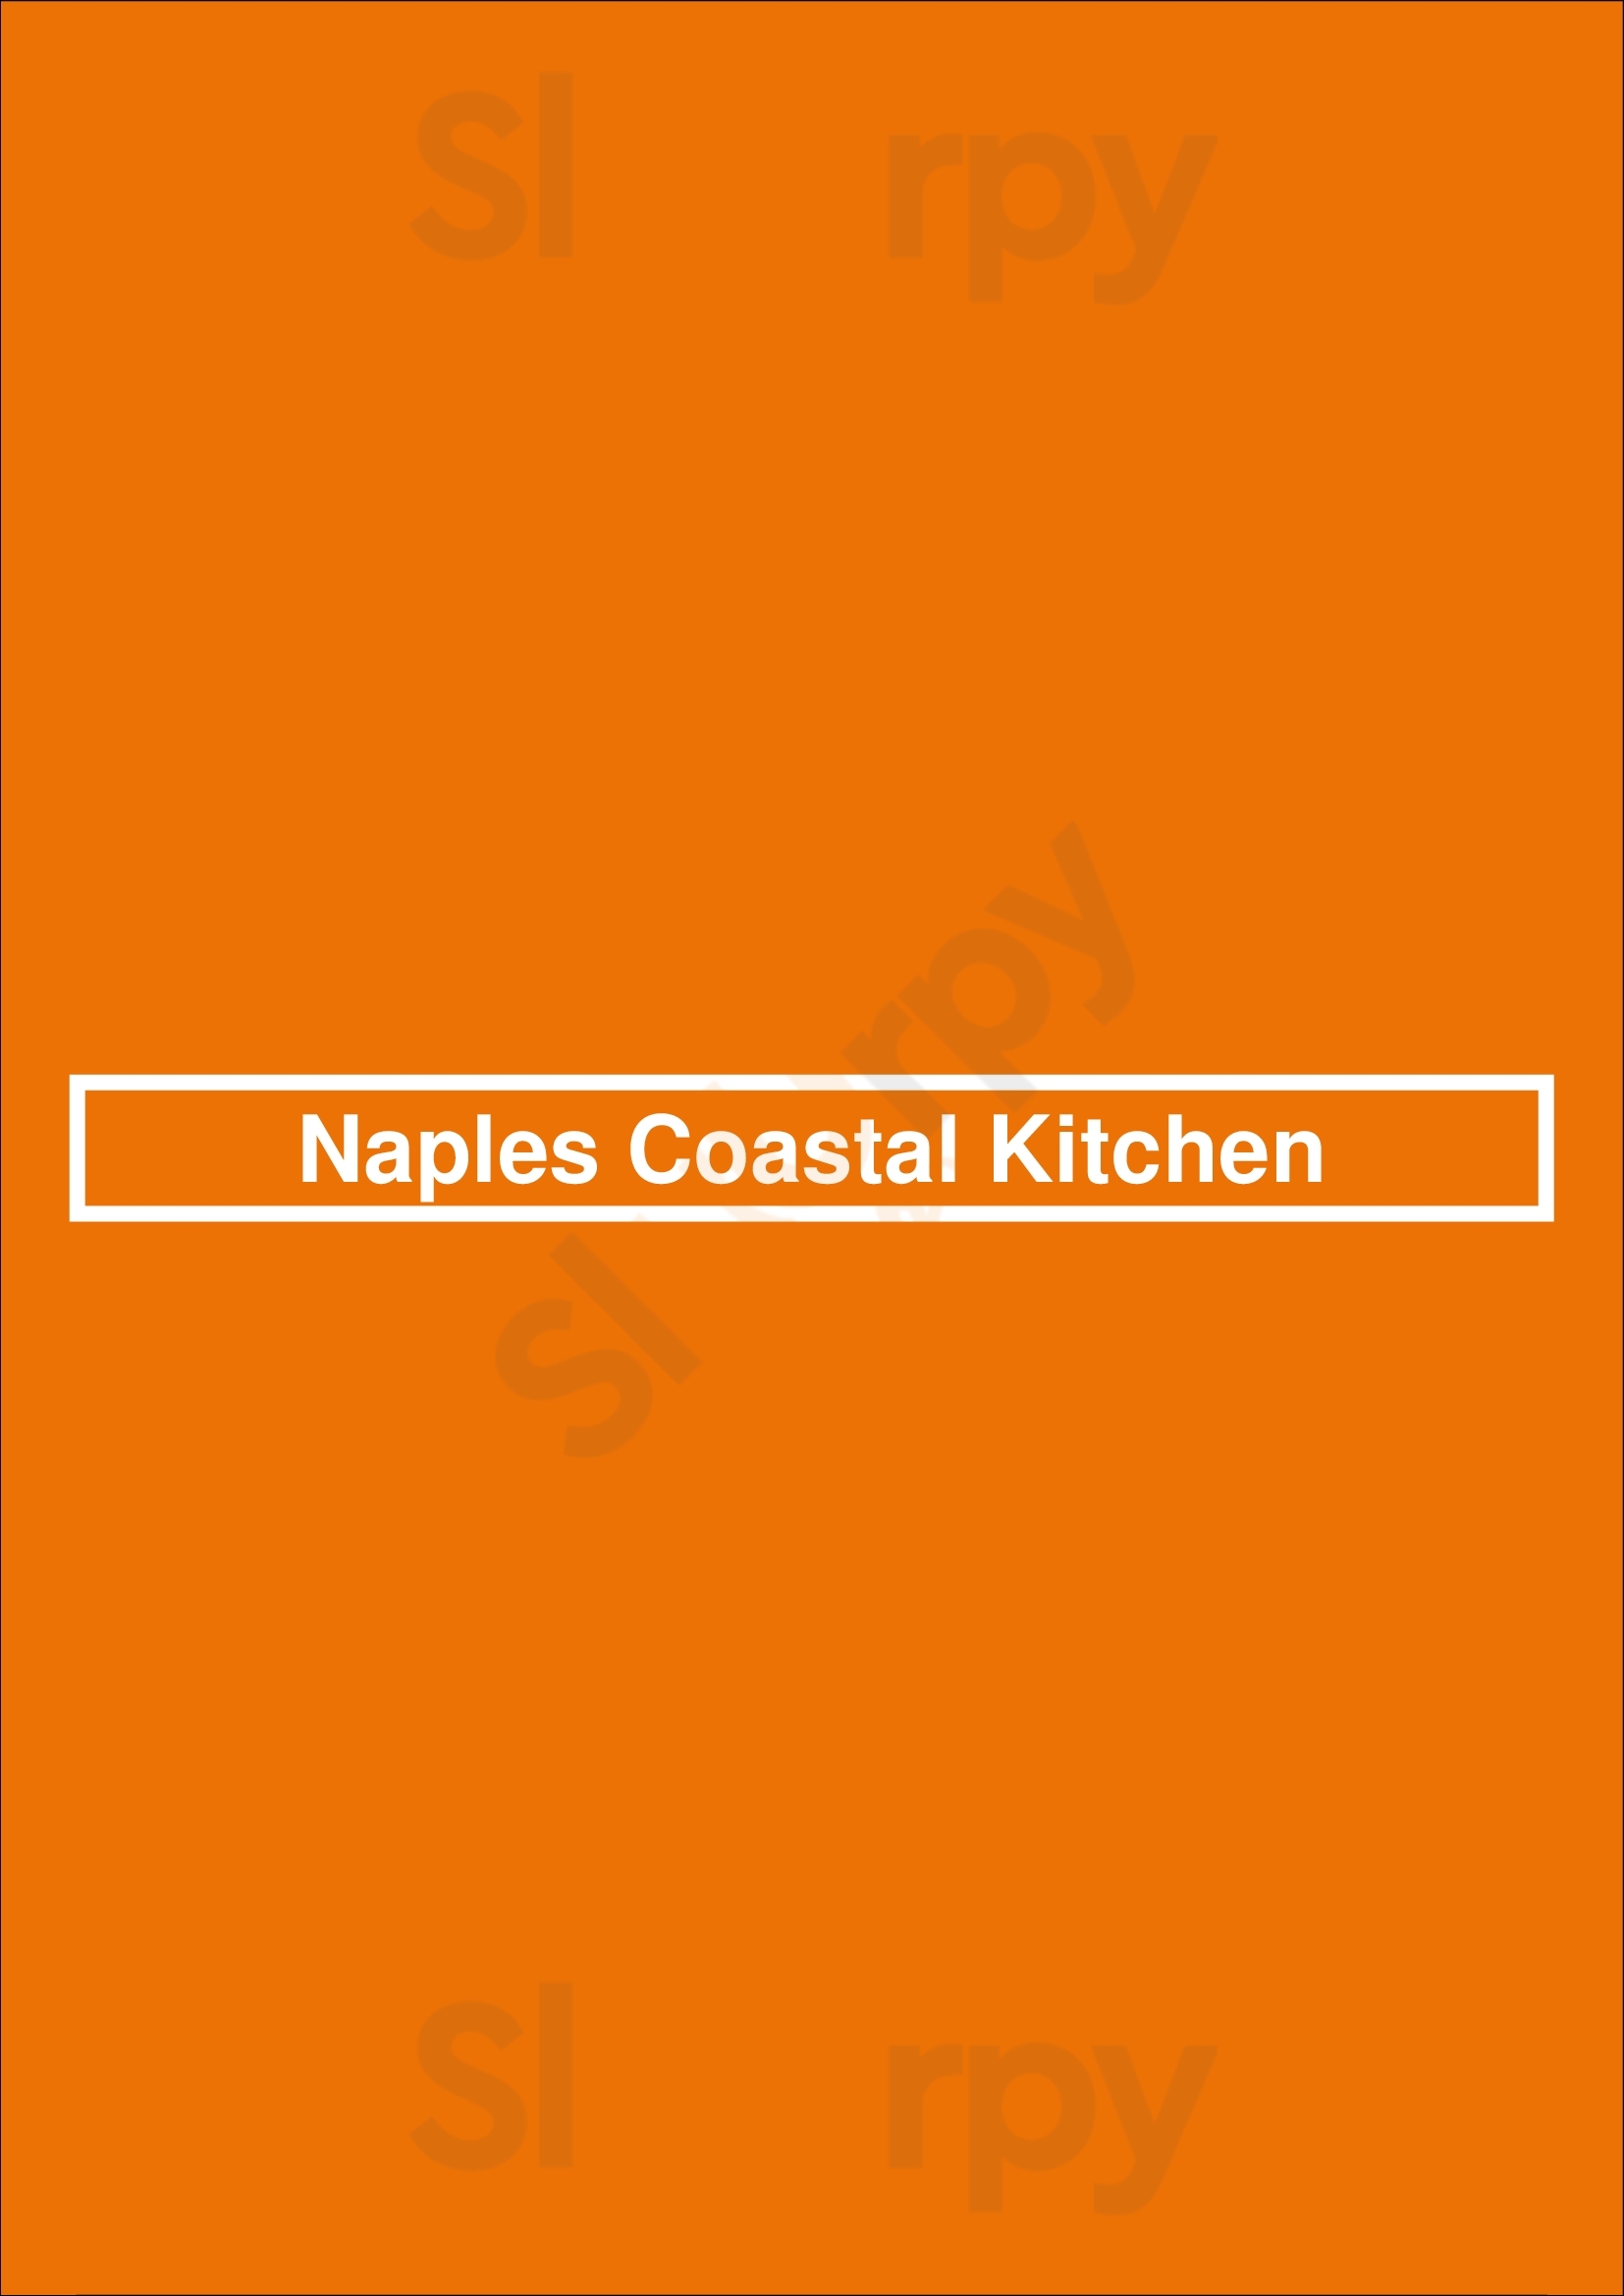 Naples Coastal Kitchen Fort Myers Menu - 1